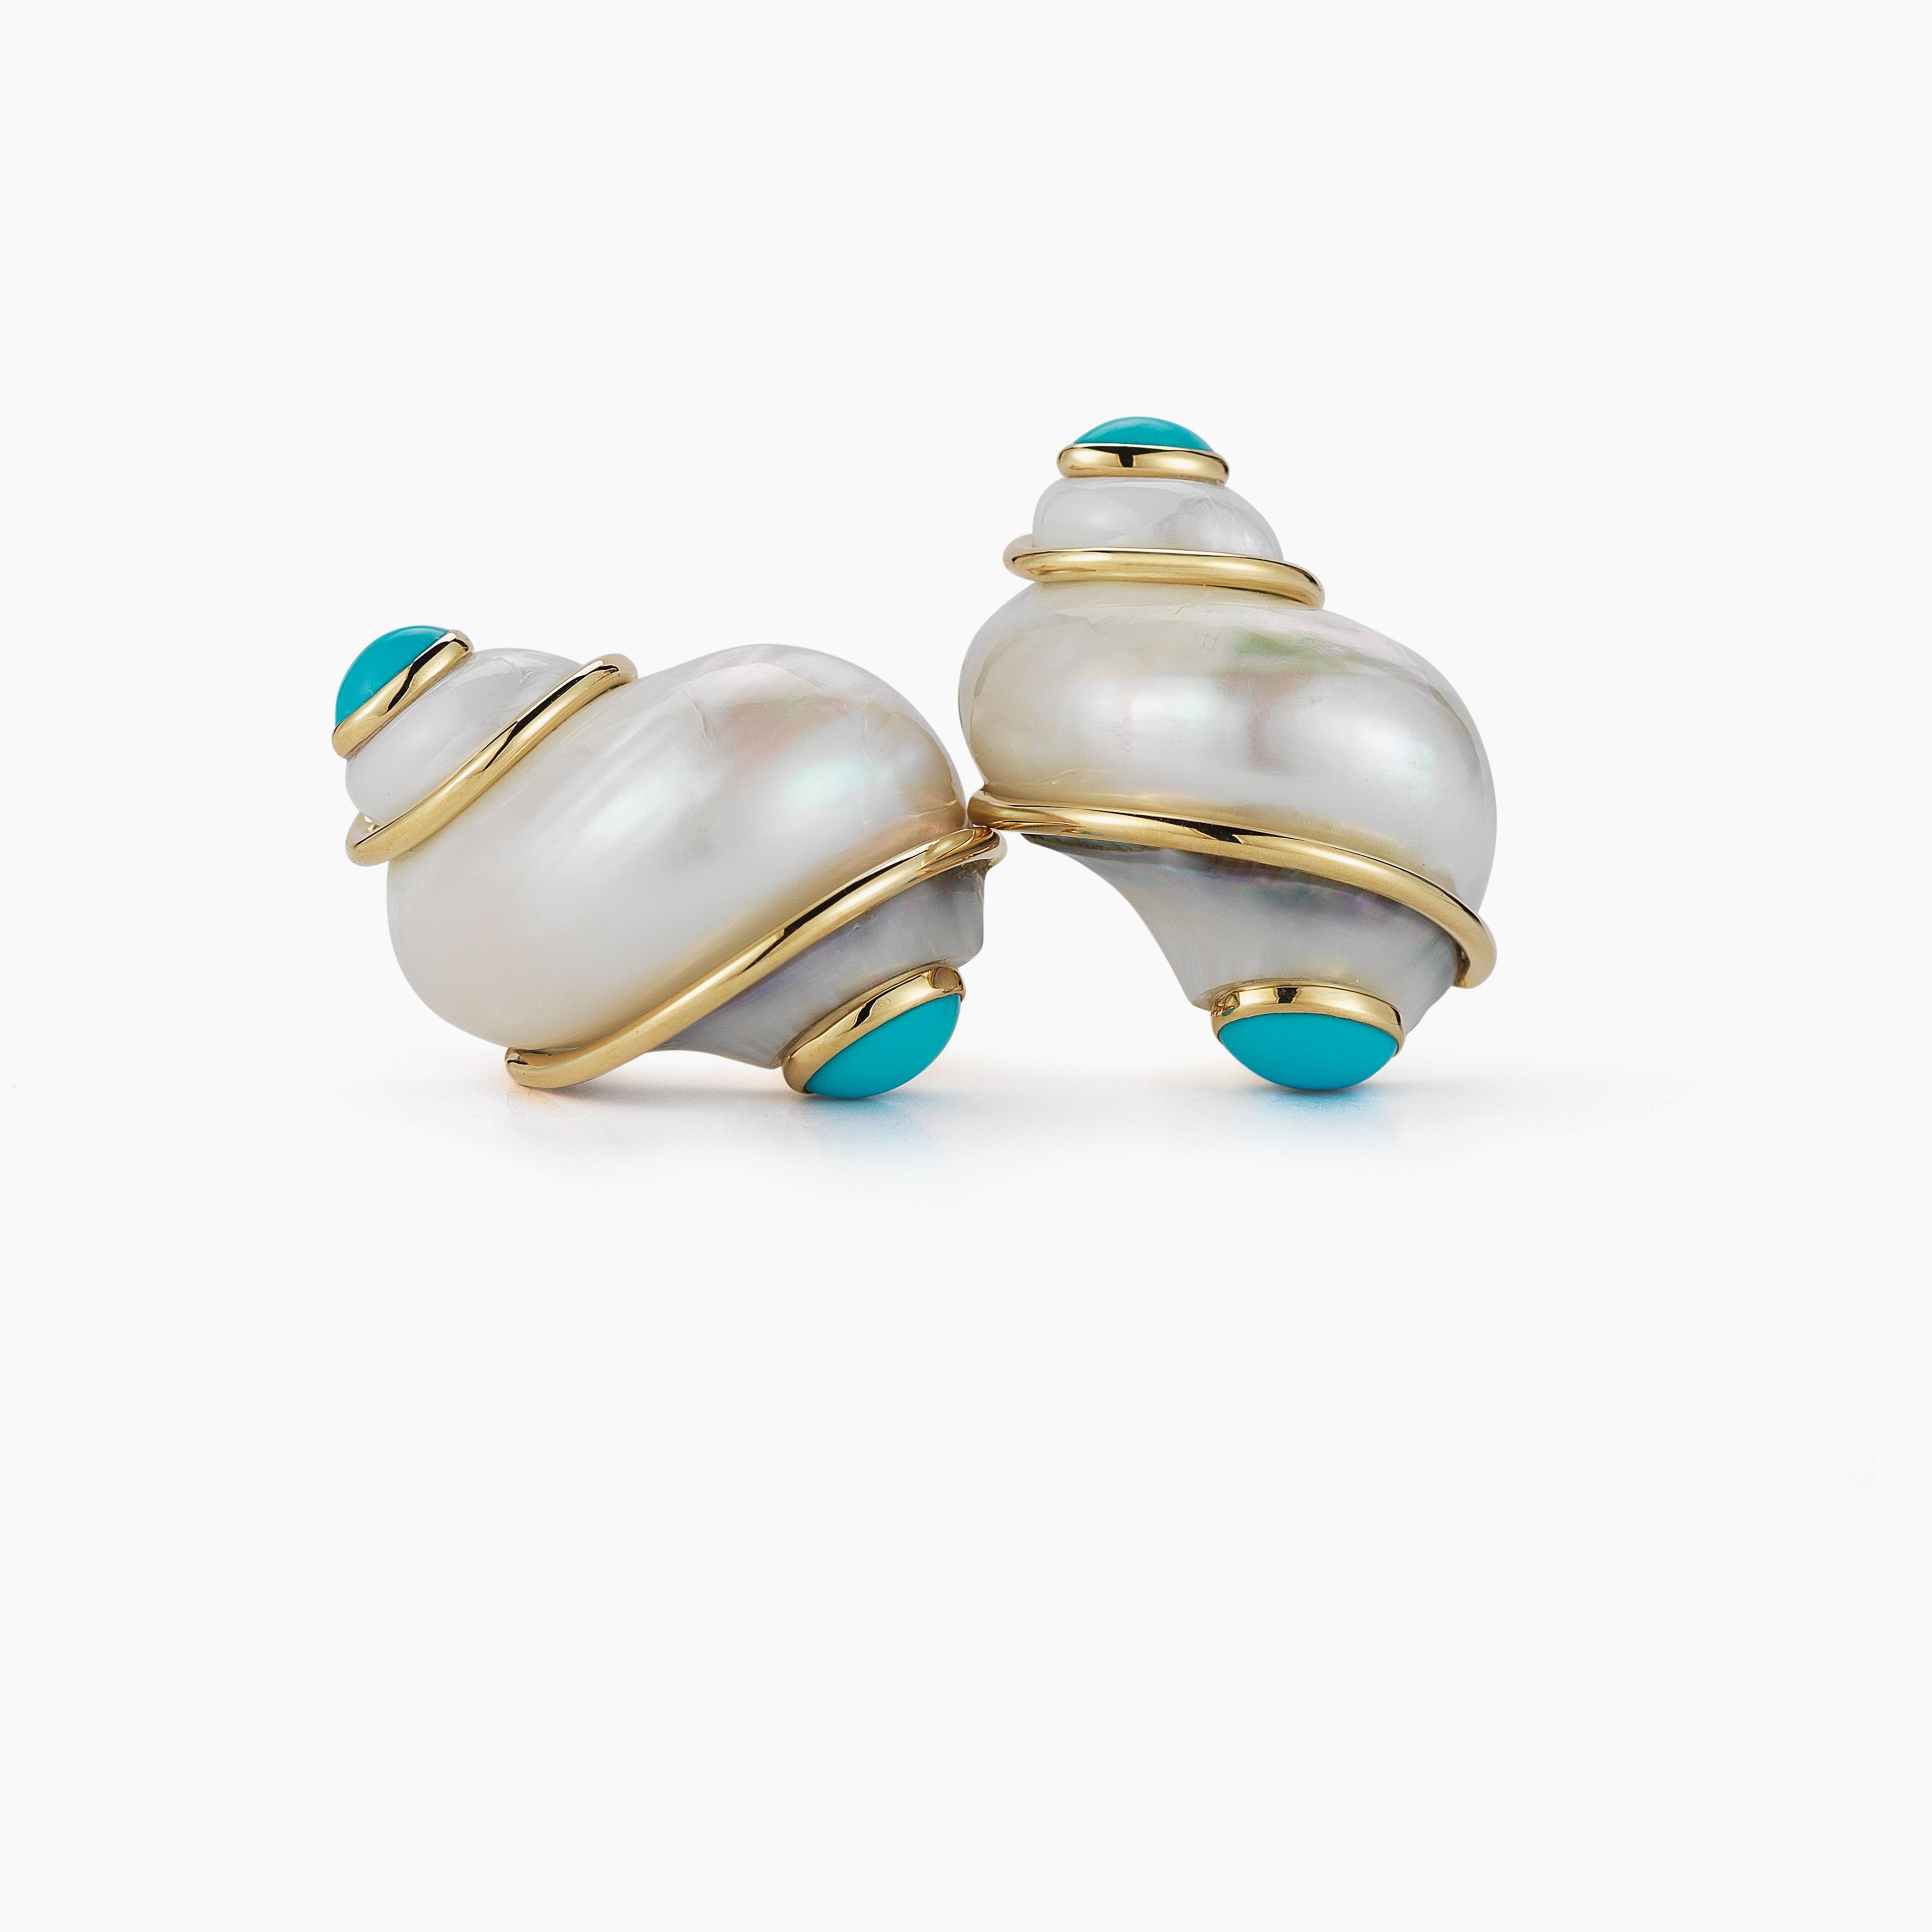 Turbo Shell Earrings in Turquoise